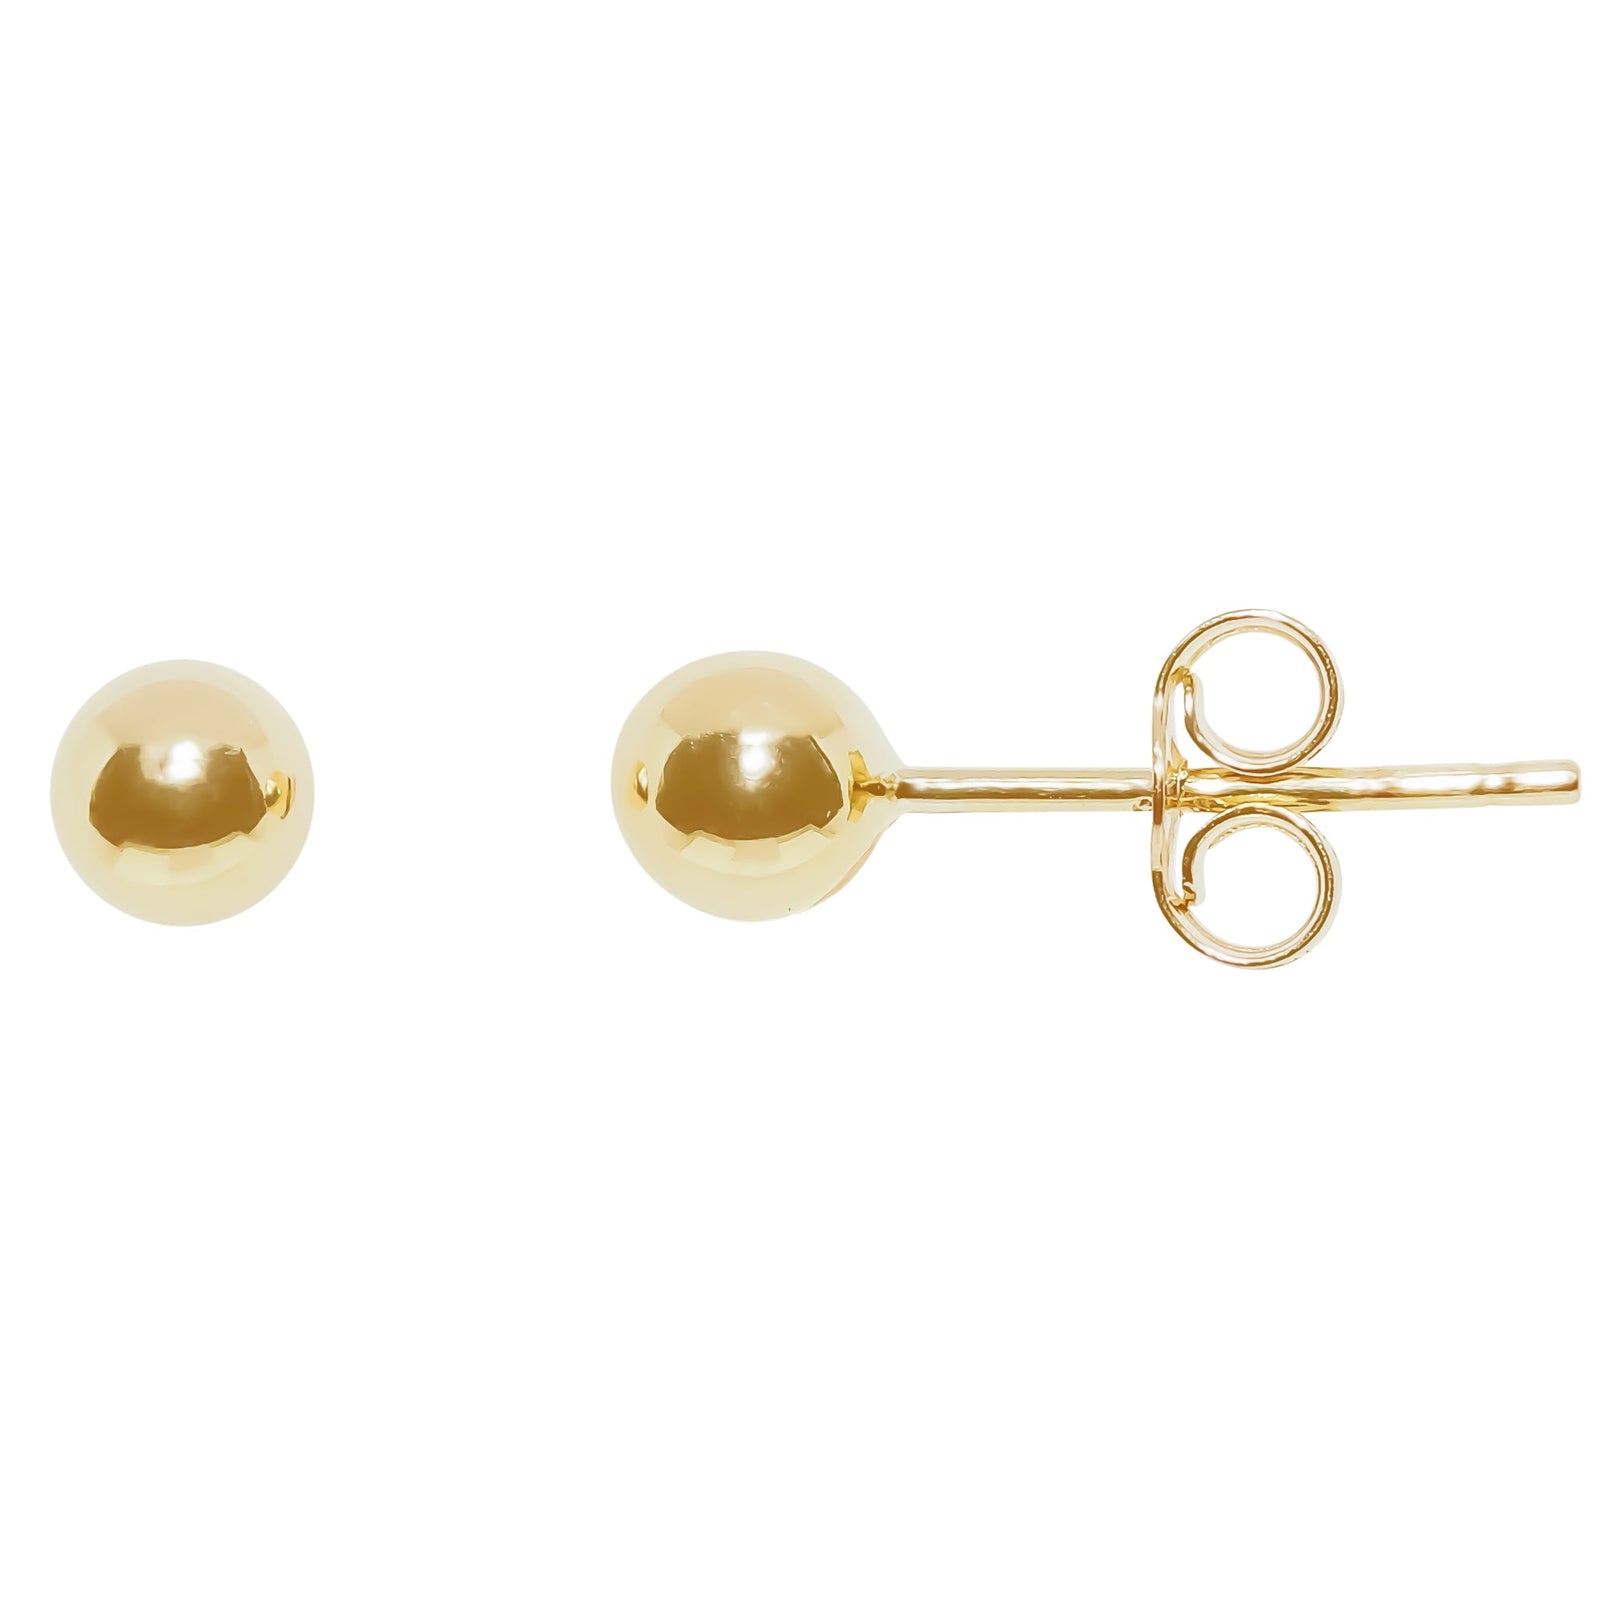 9ct gold 4mm ball stud earrings